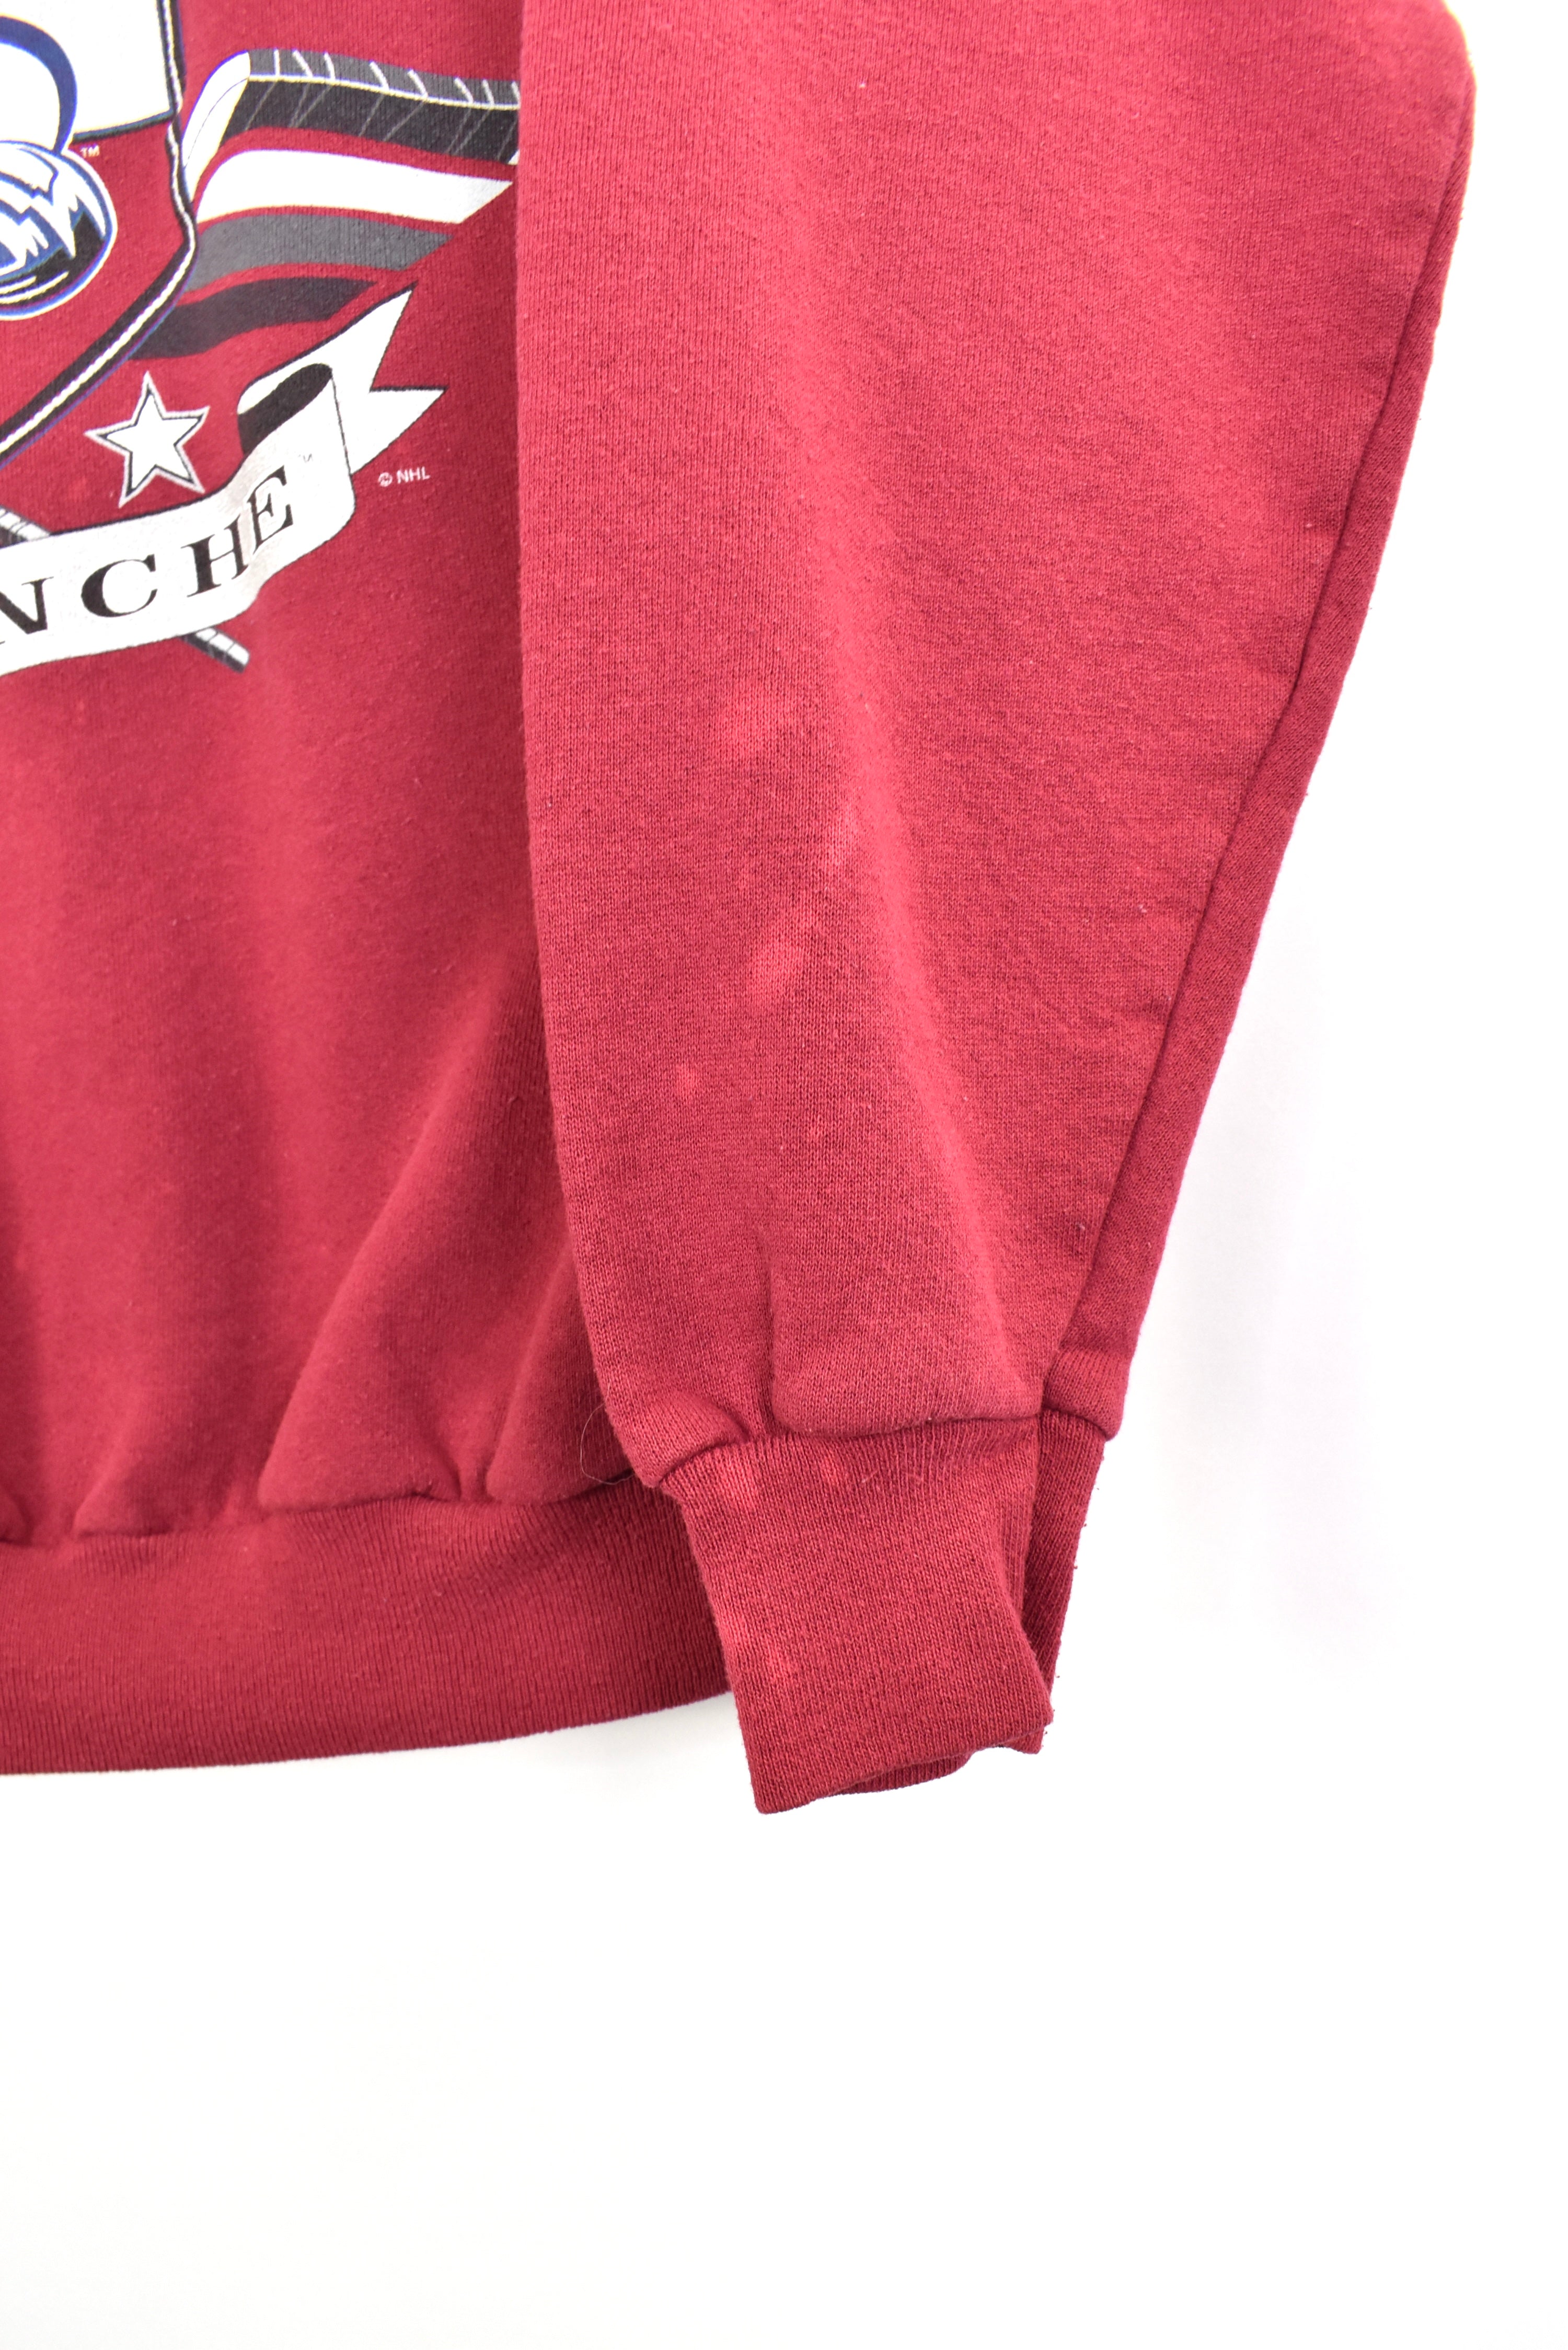 Vintage Colorado Avalanche sweatshirt, NHL long sleeve graphic crewneck - medium, burgundy PRO SPORT